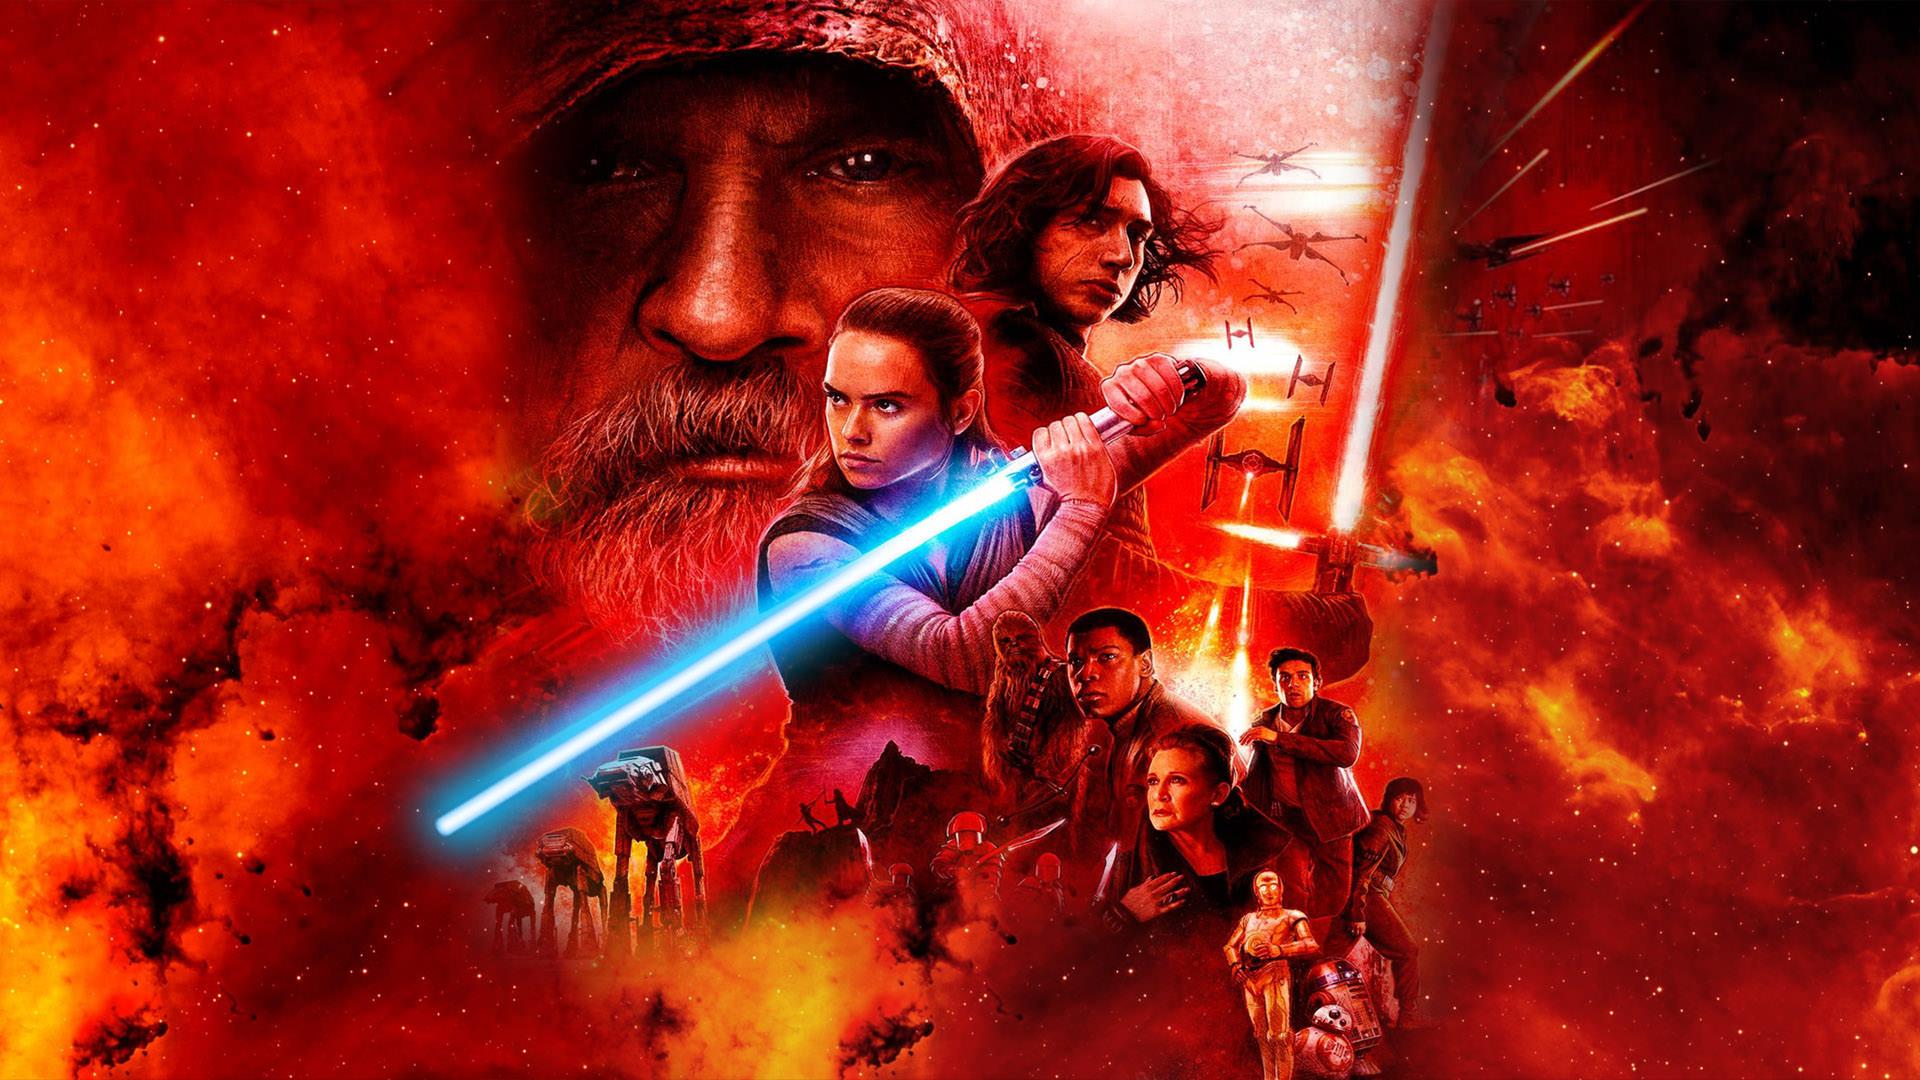 Best Movie Star Wars The Last Jedi Wallpaper. iCon Wallpaper HD